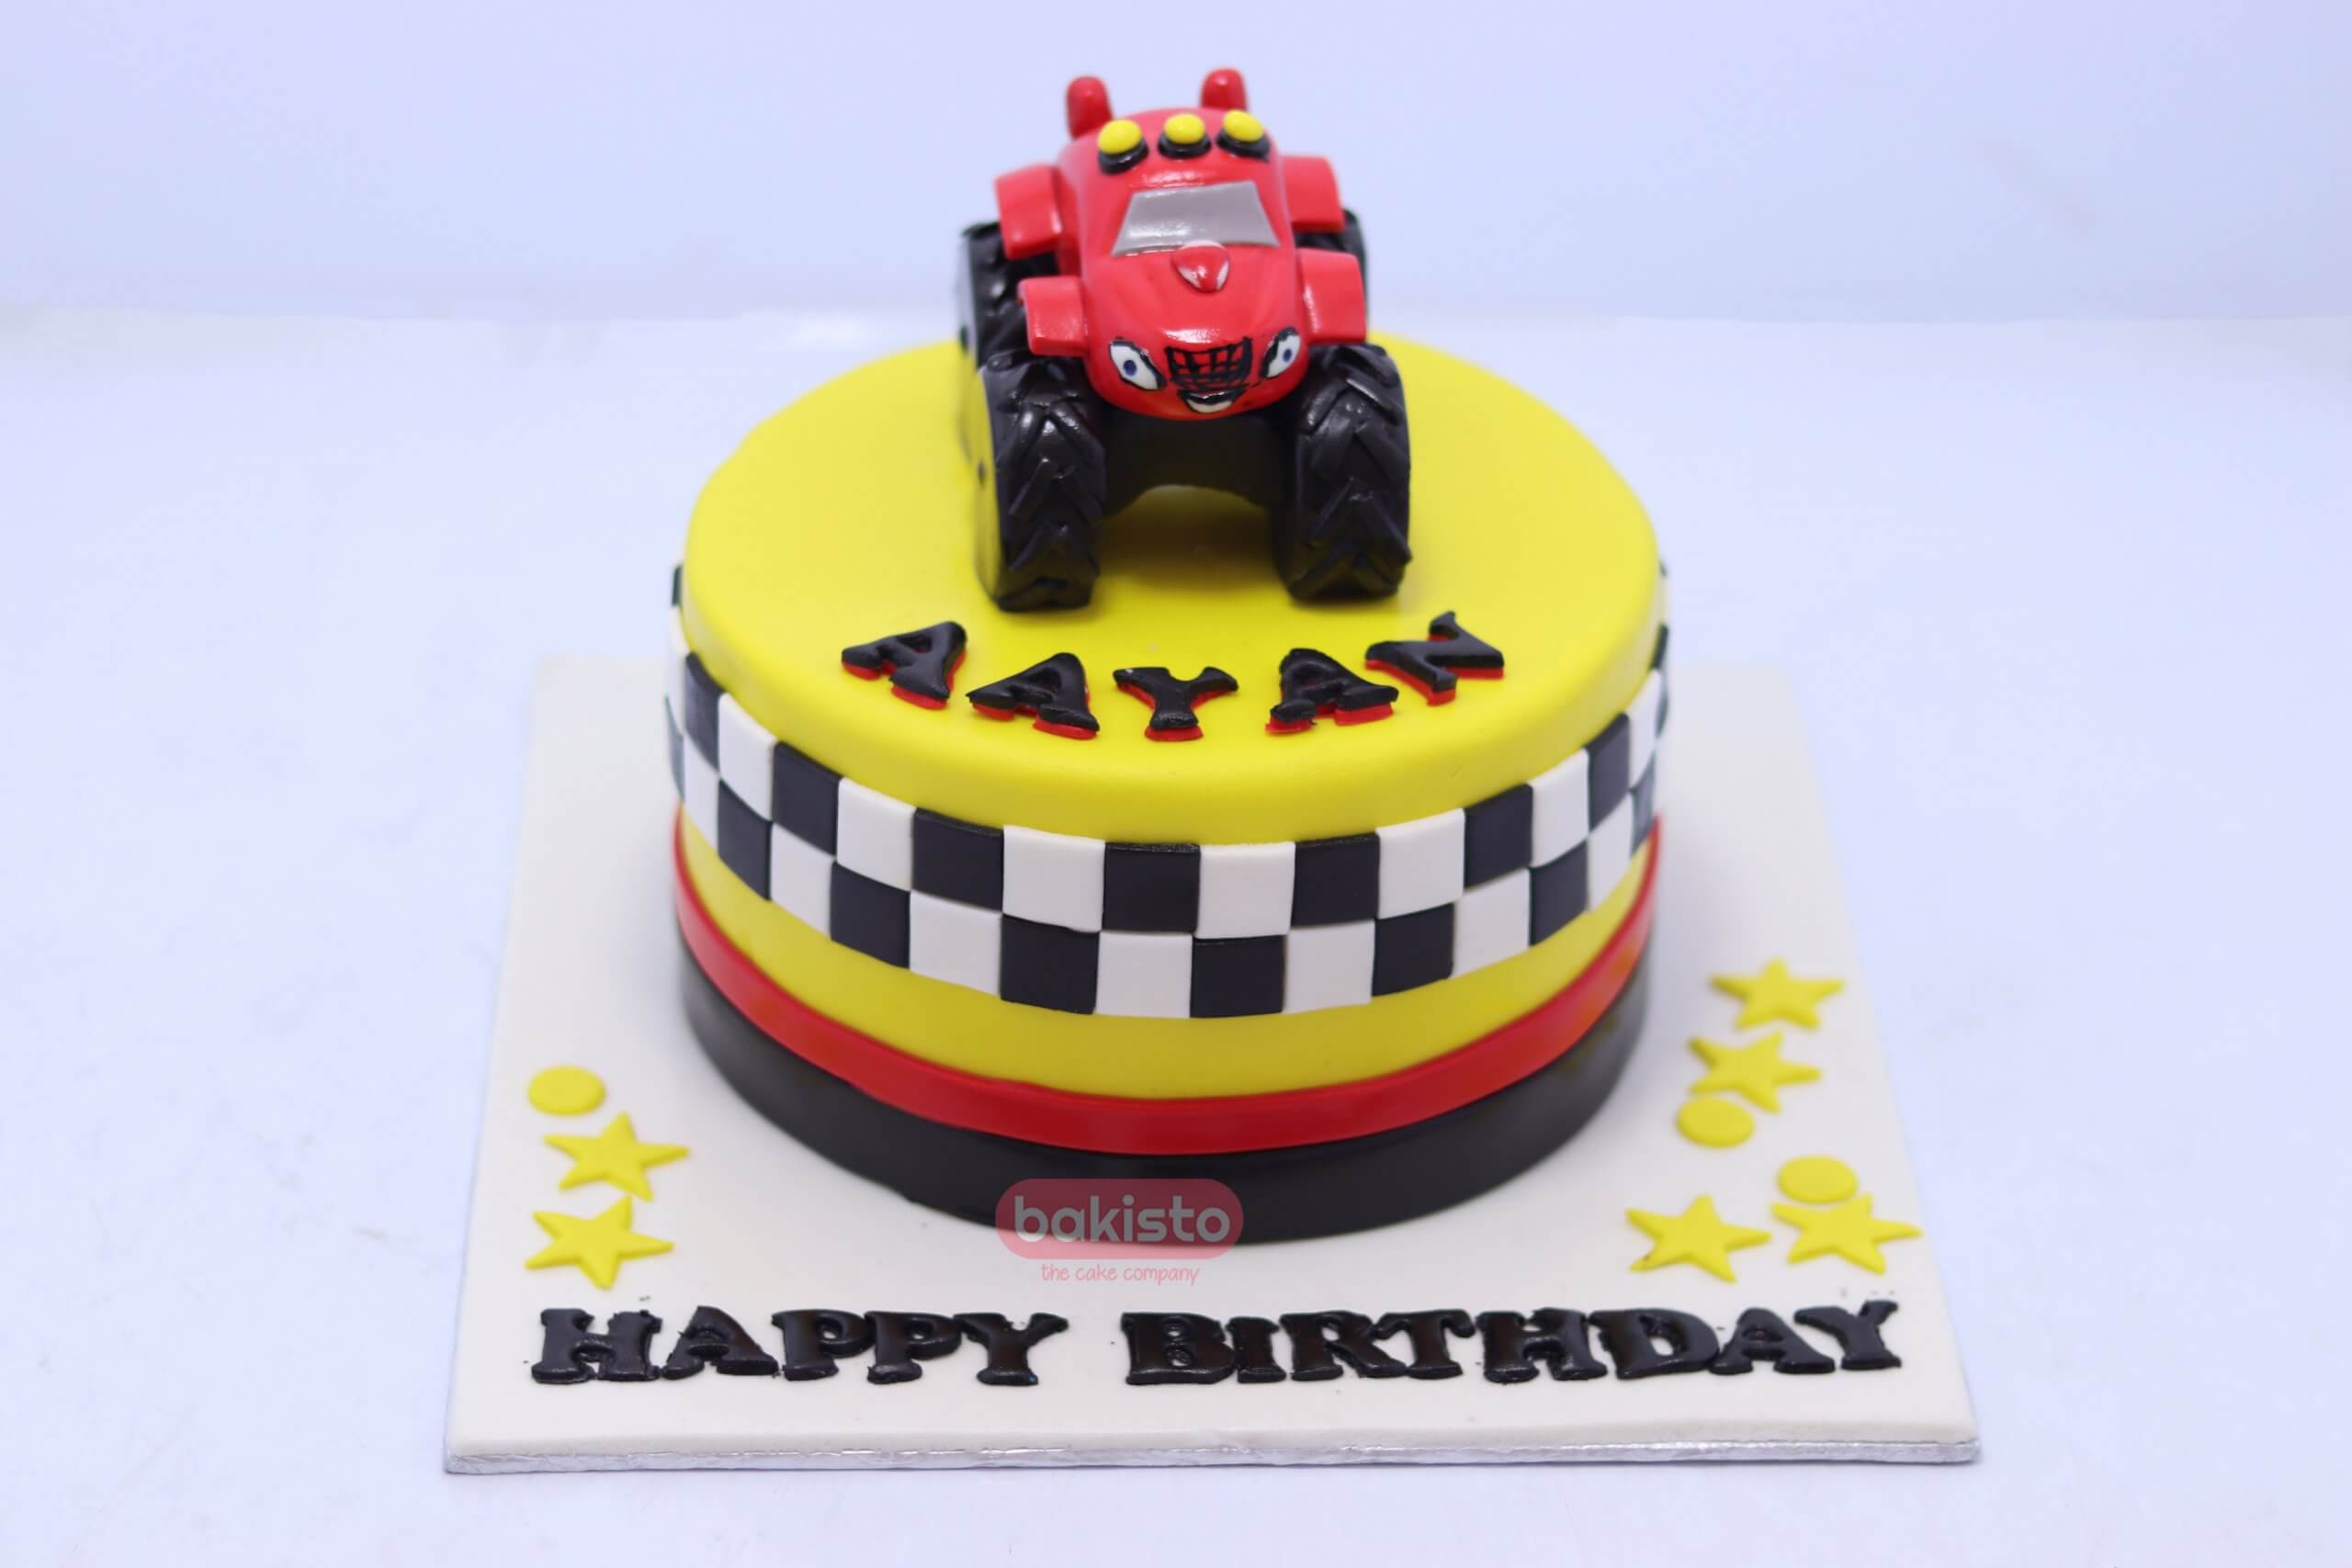 Fire Station Birthday Cake – Freed's Bakery